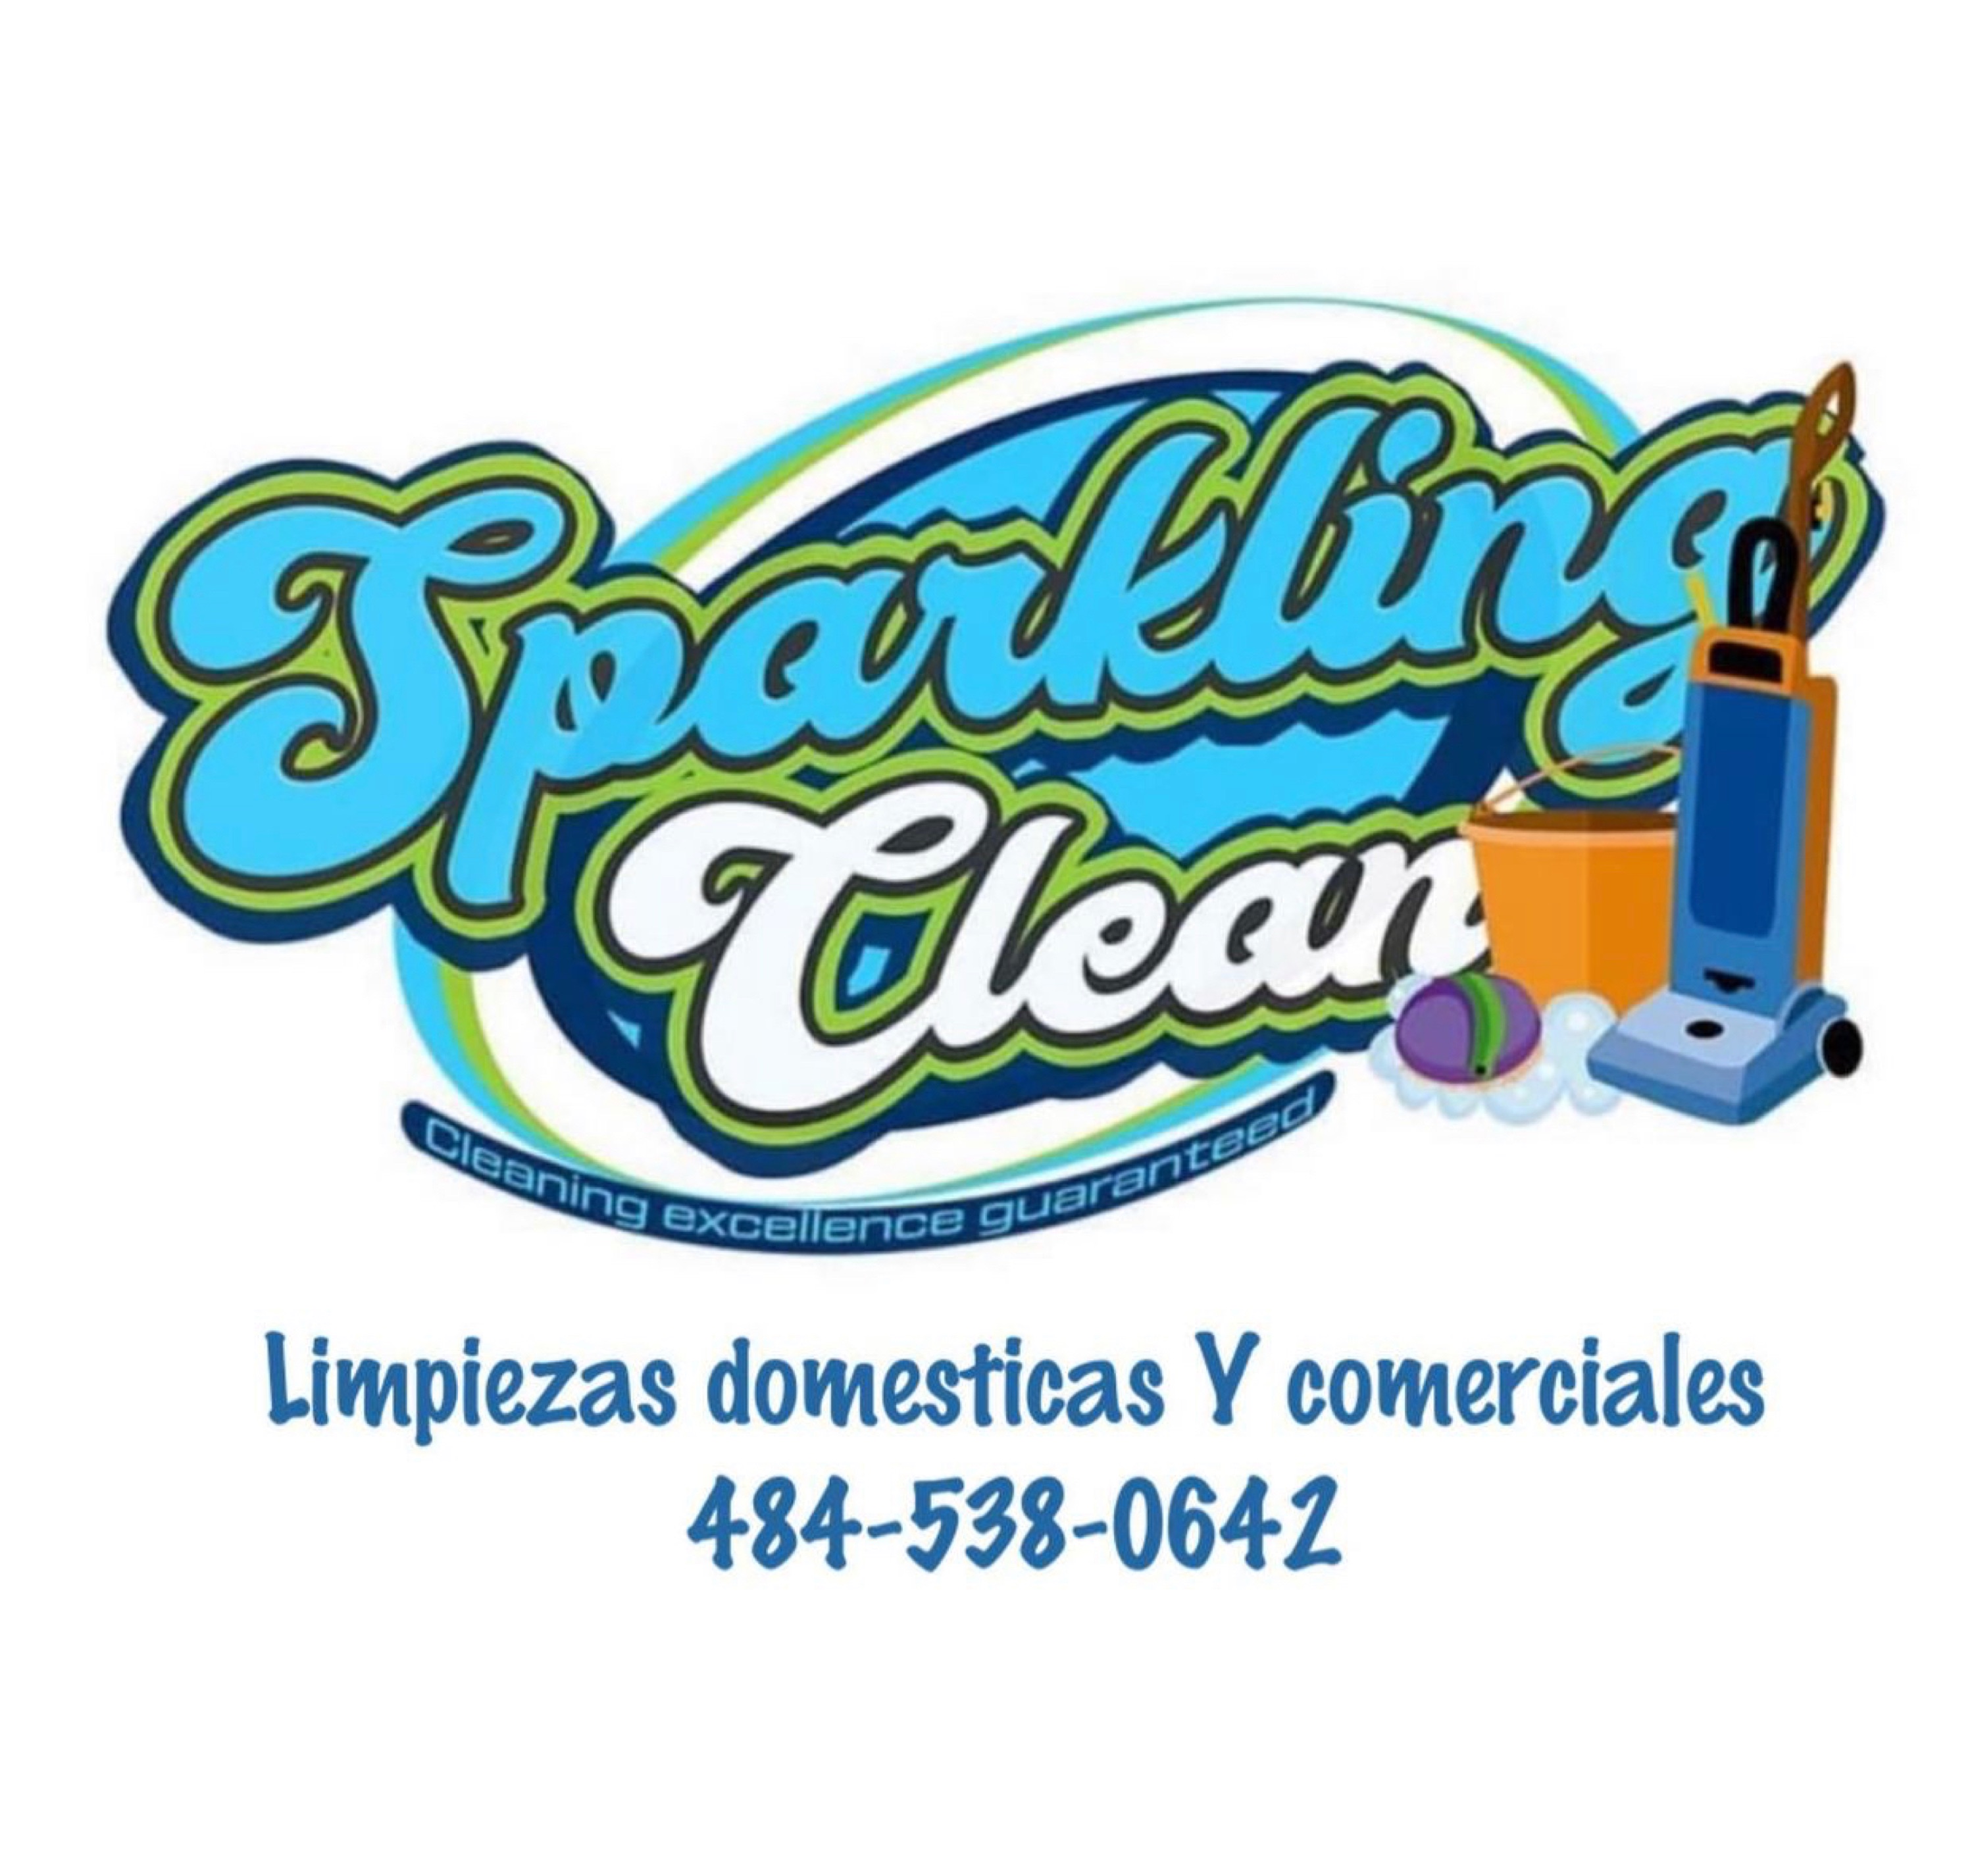 Sparkling Clean Logo